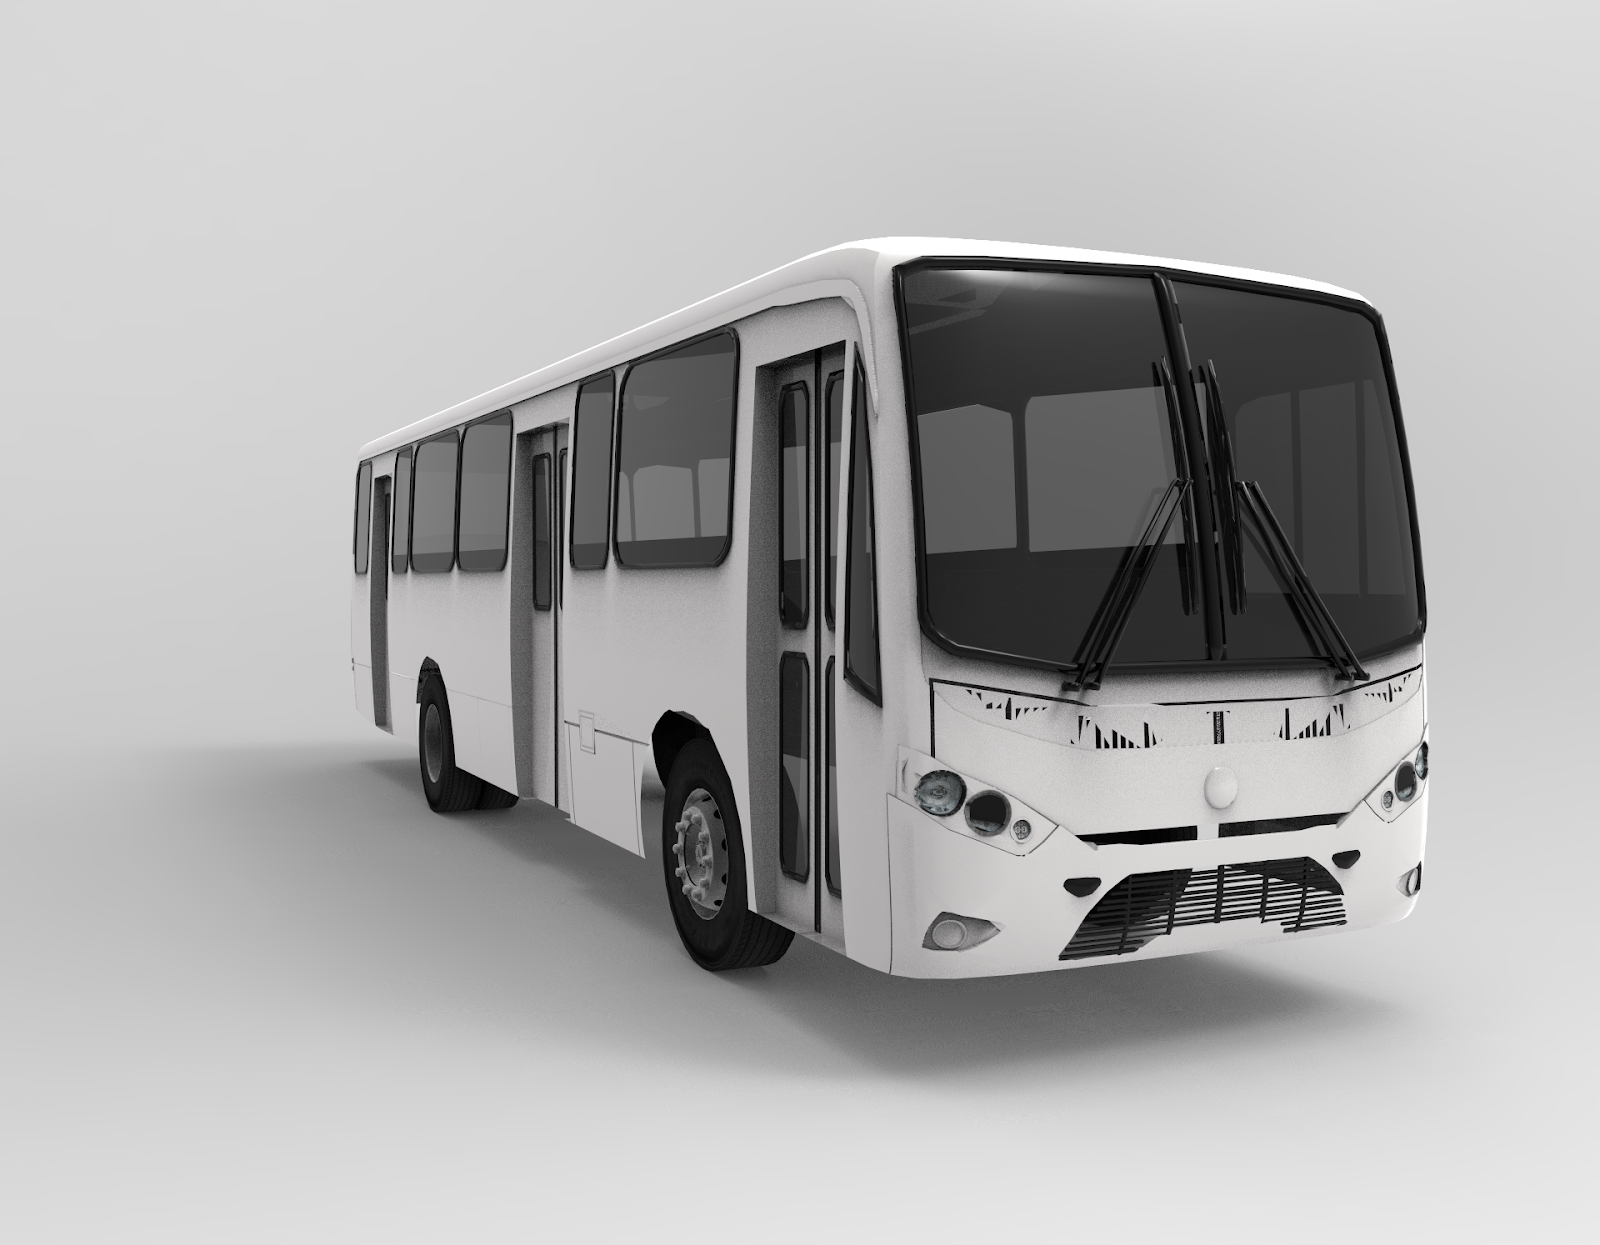 Jogo Simulador de estacionamento de ônibus 3d online. Jogar gratis